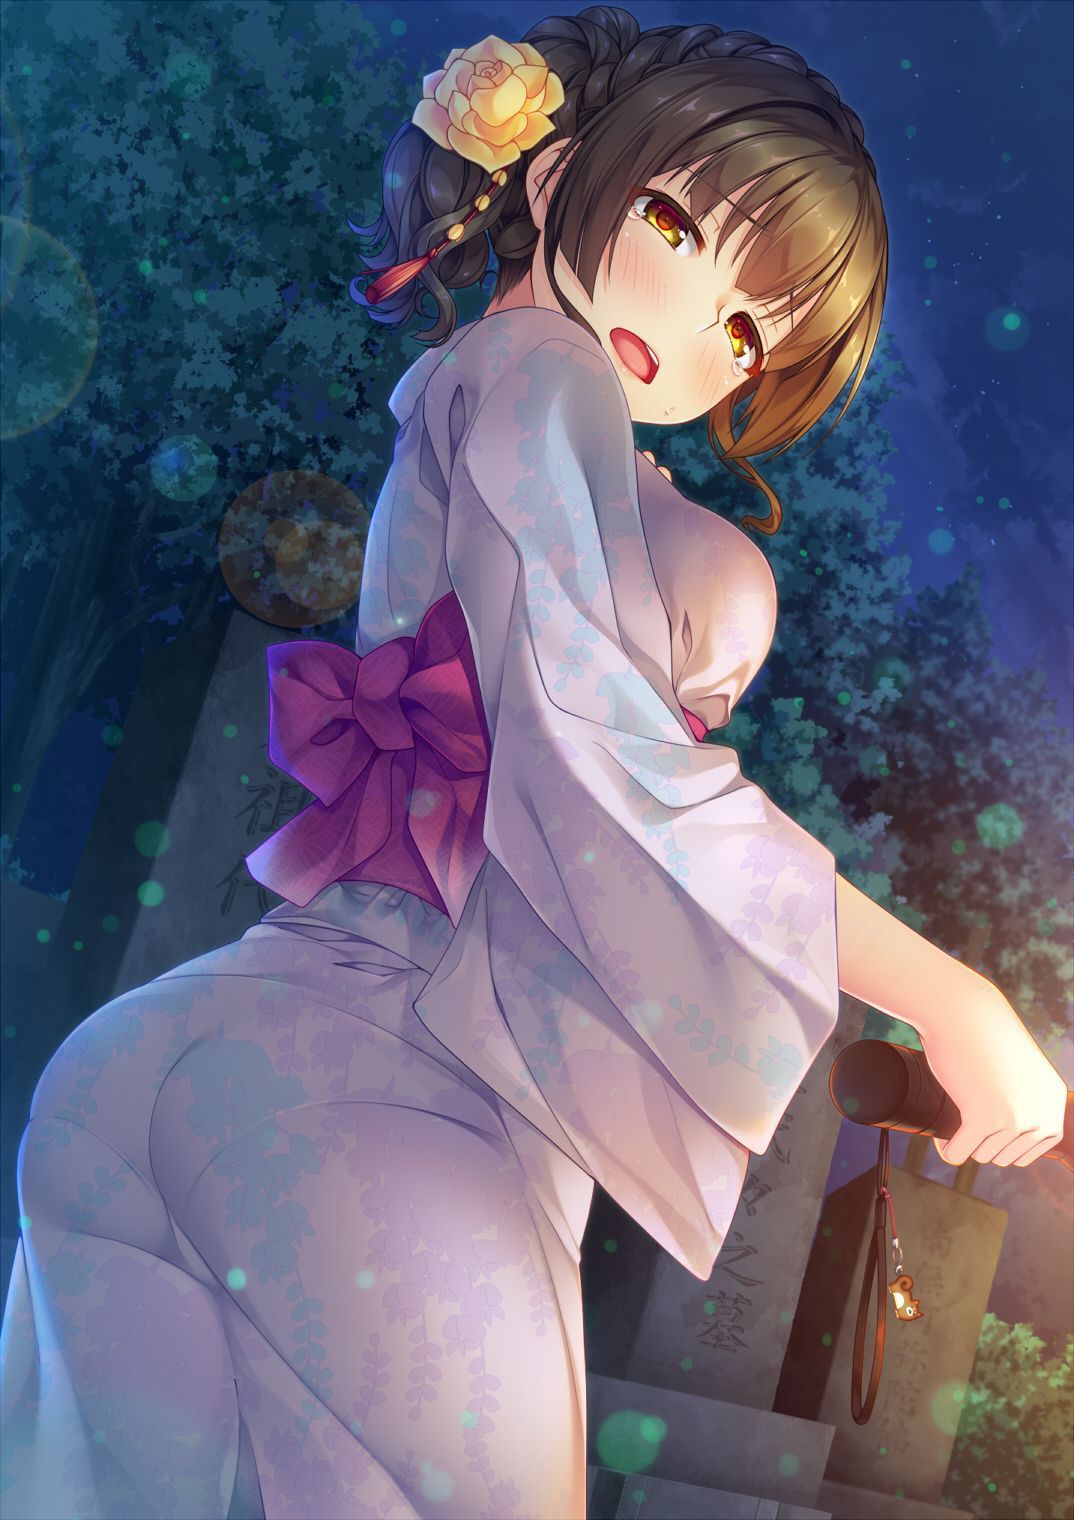 [2nd] The disturbed kimono figure is erotic erotic girl secondary erotic image part 18 [Kimono] 8